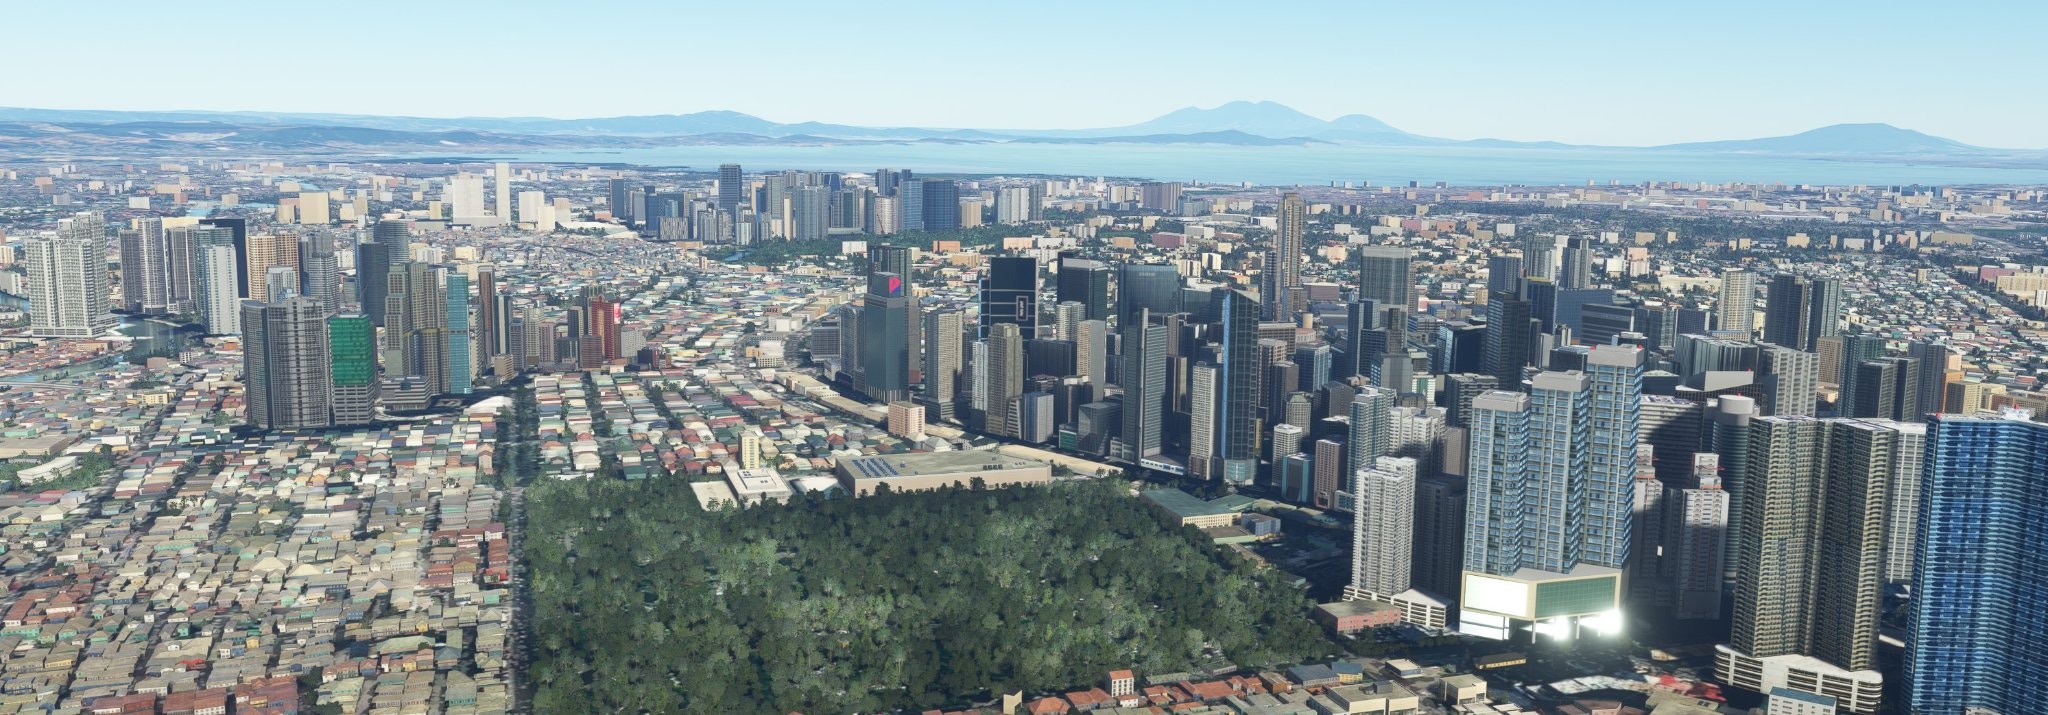 CloudSurf Asia Simulations is Bringing Mega Manila to MSFS